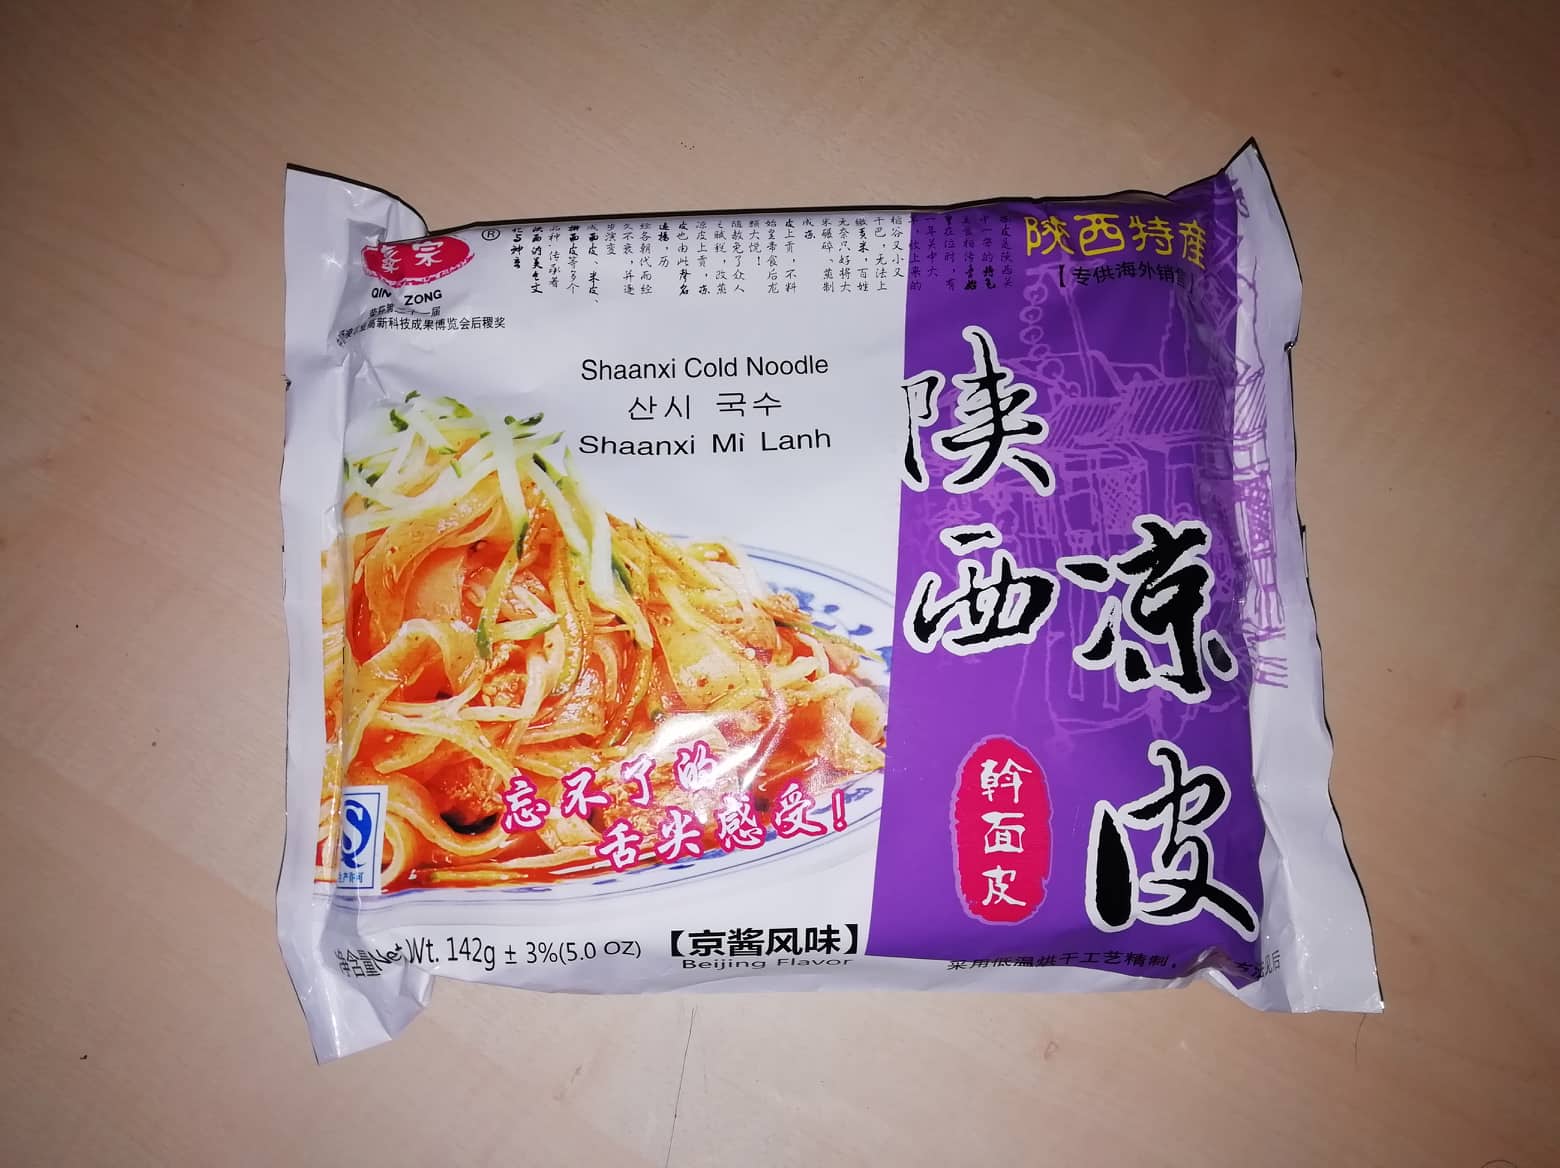 #1603: Qin Zong "Shaanxi Cold Noodle Beijing Flavor"